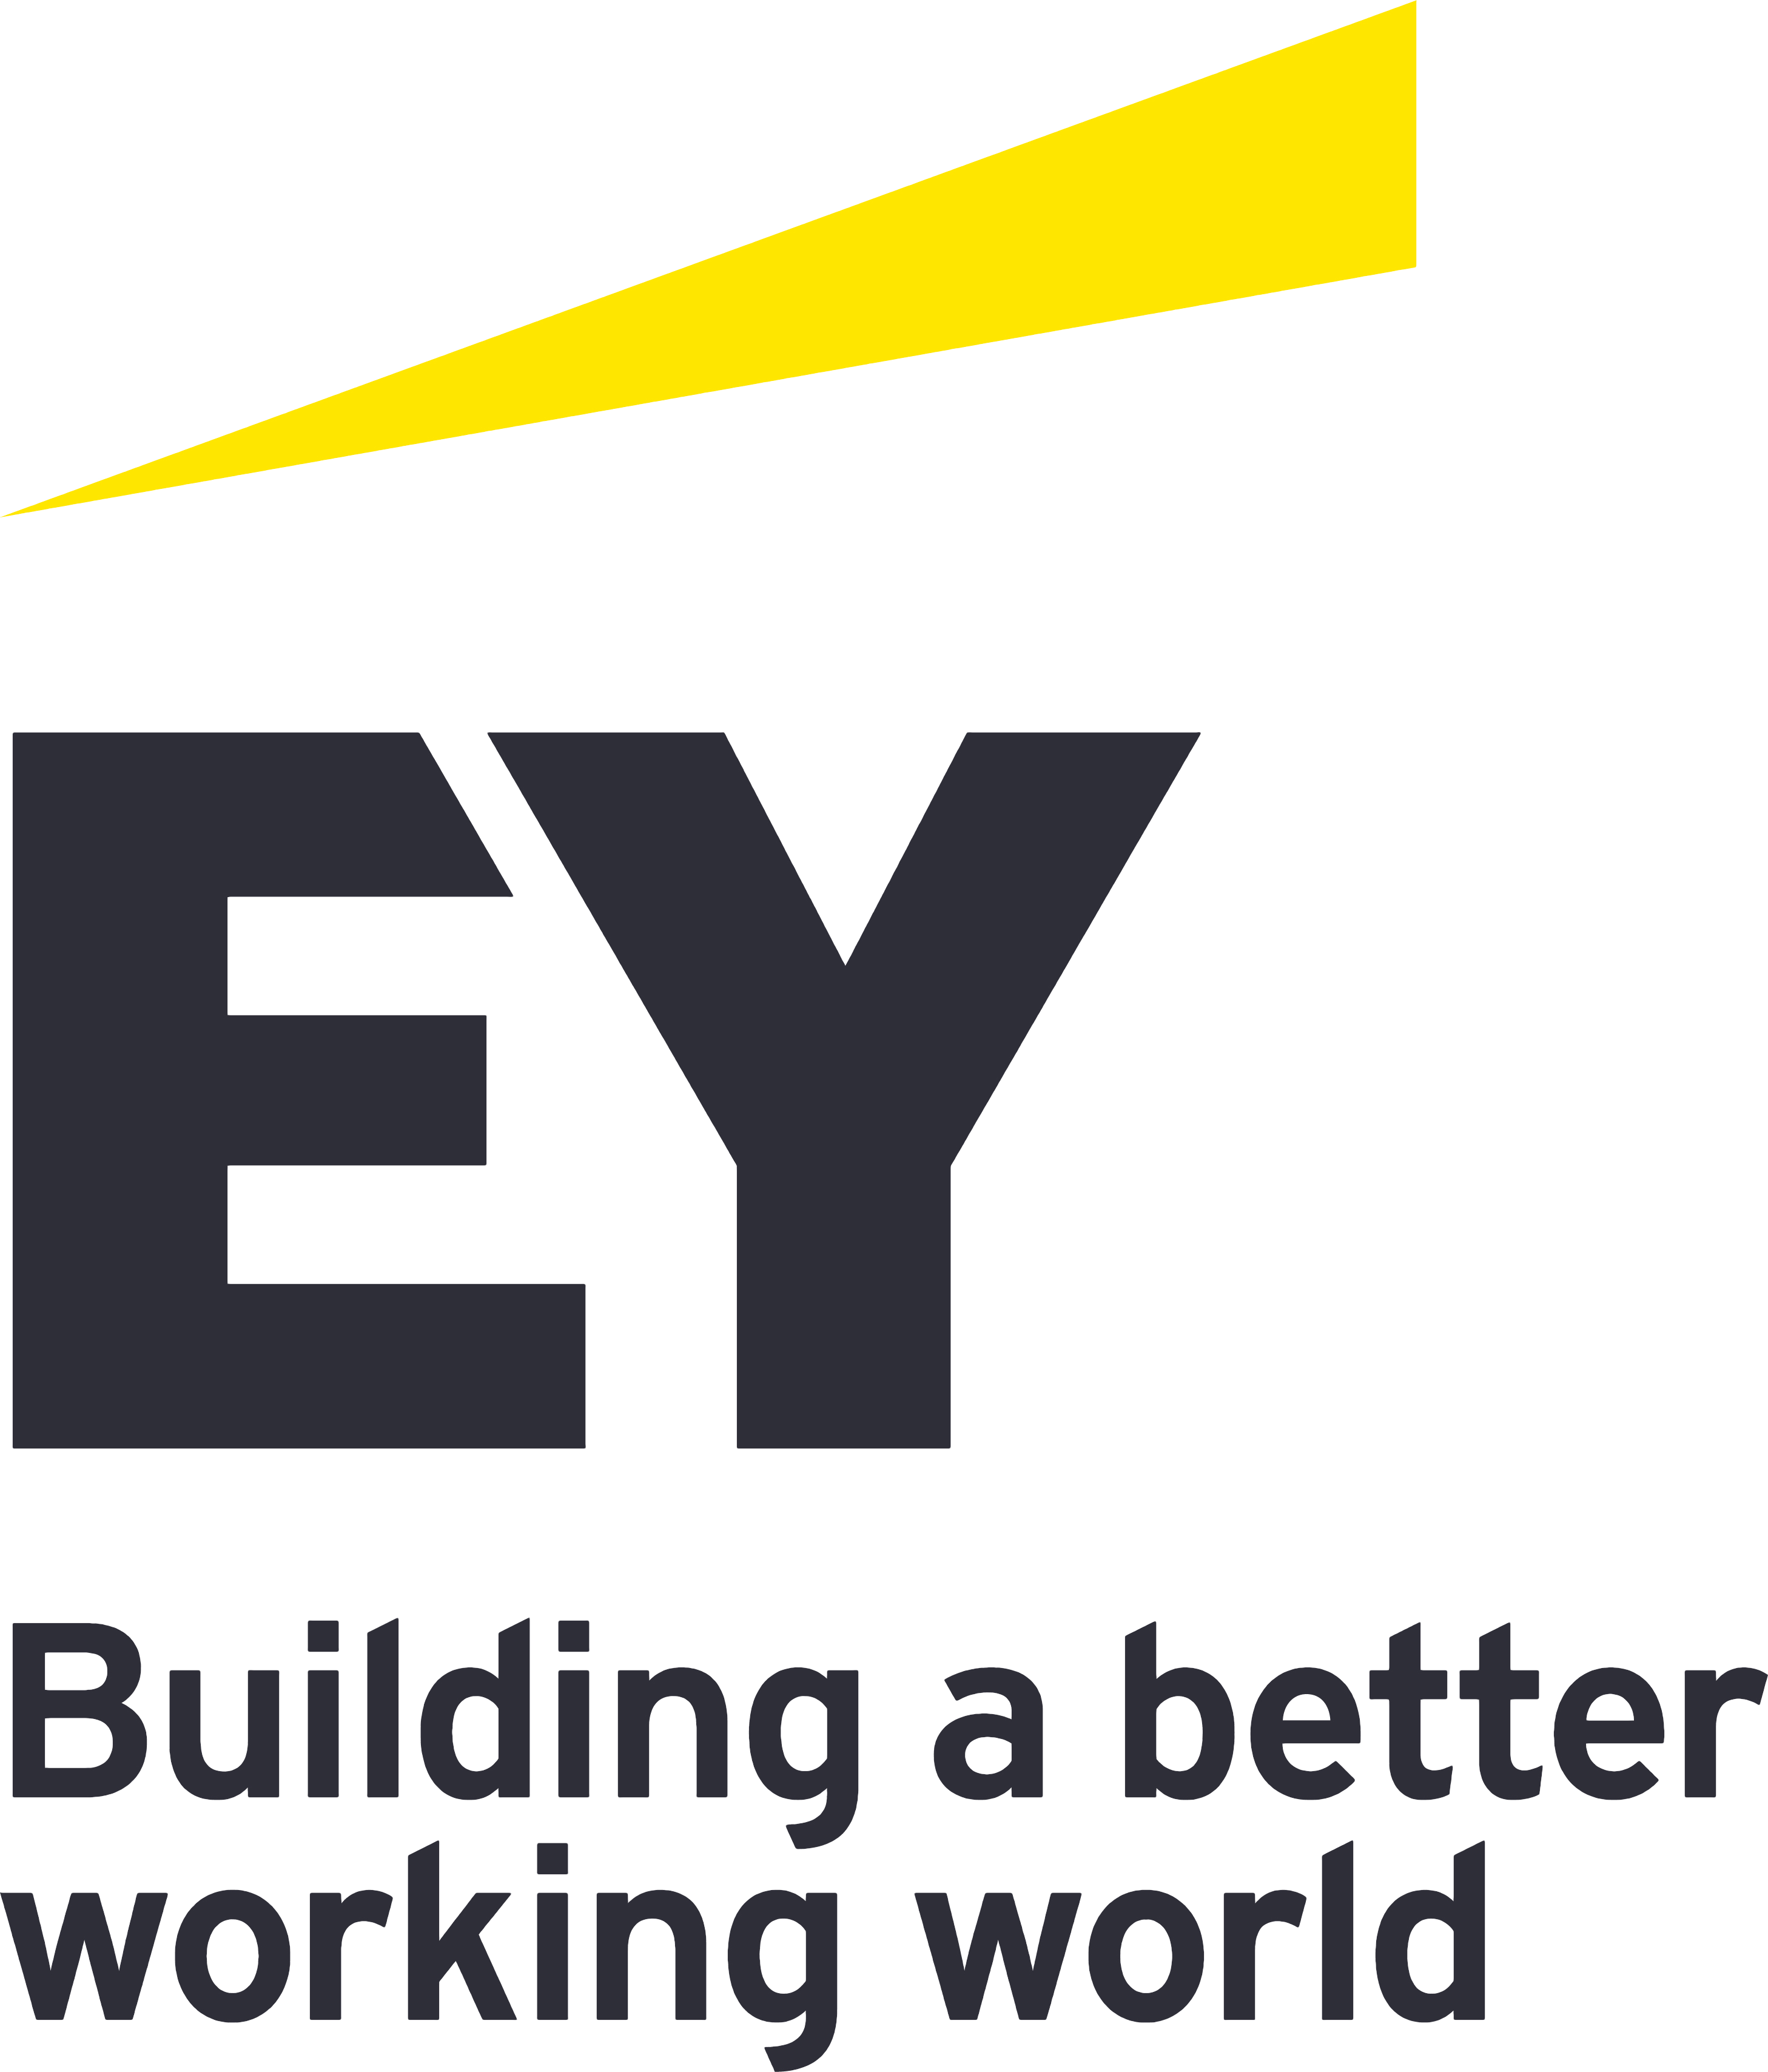 Logo of EY